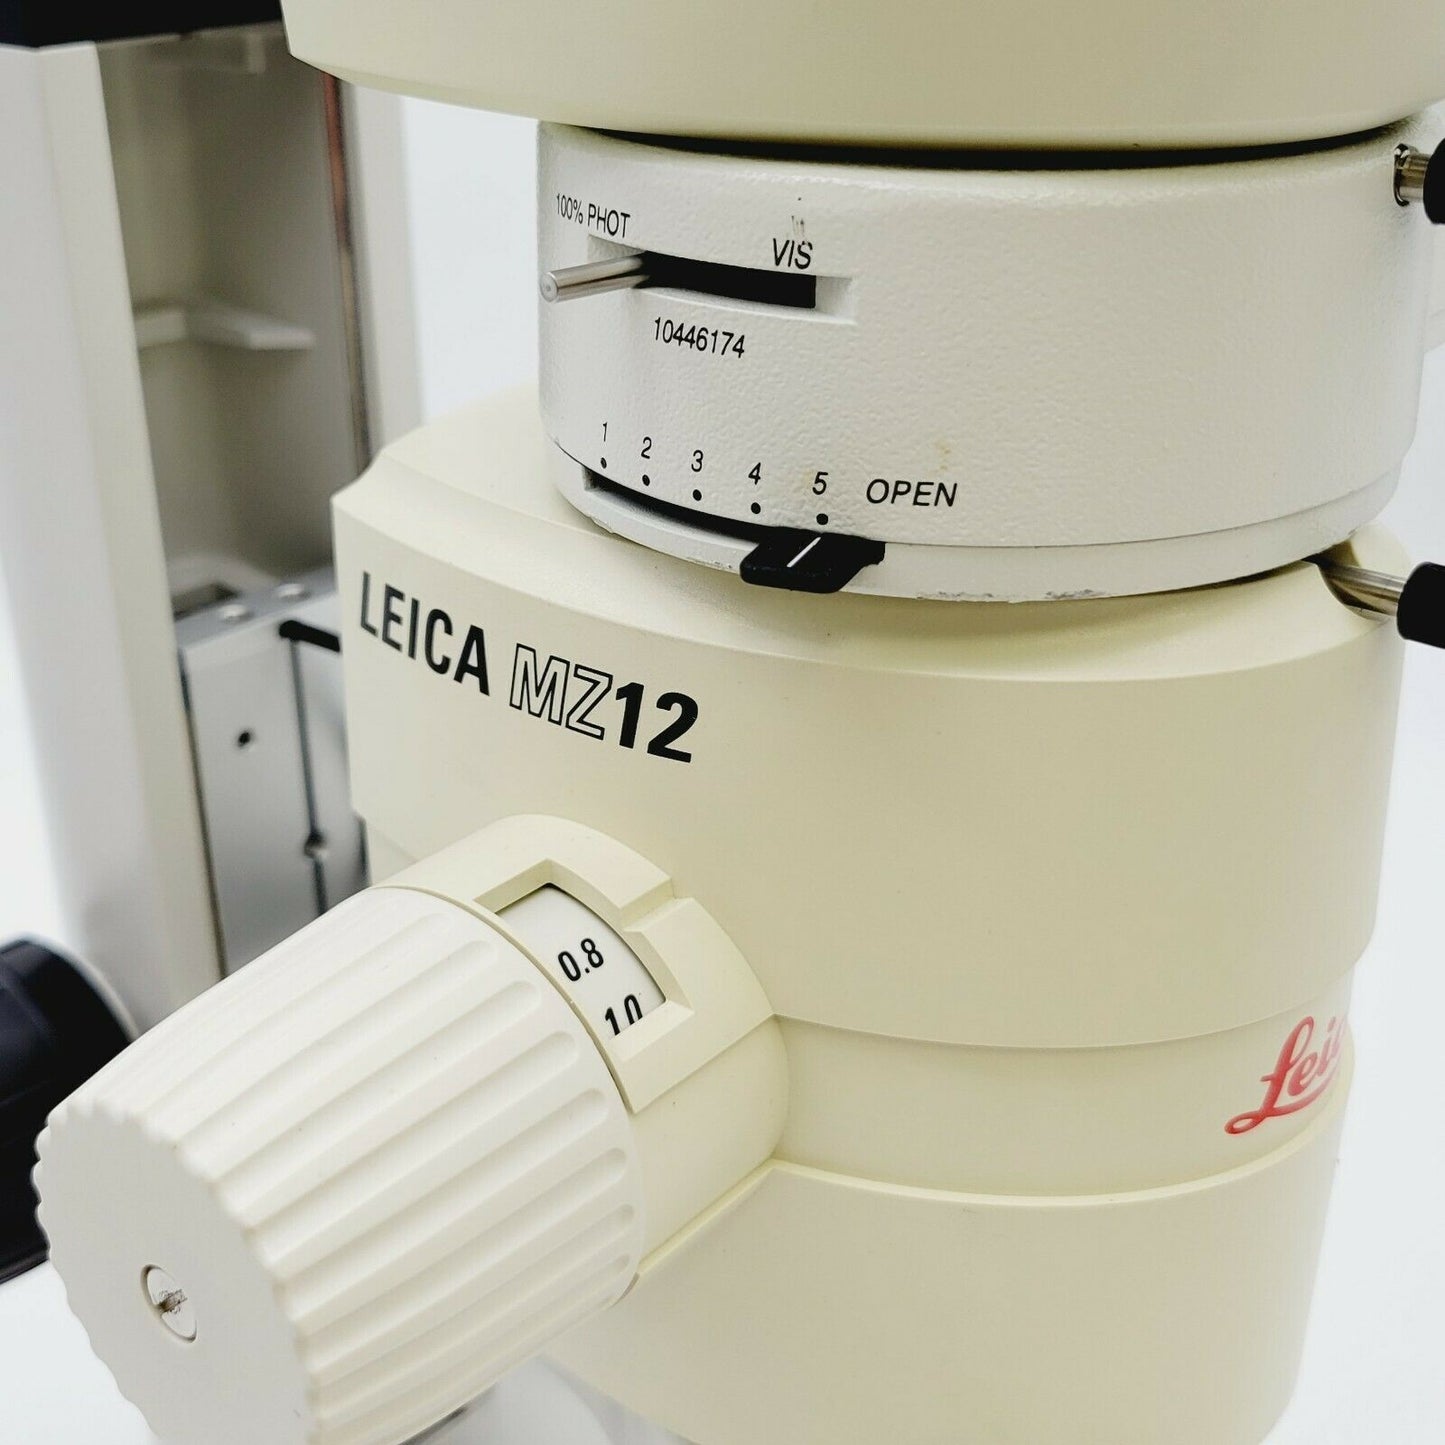 Leica Stereo Microscope MZ12 with Plan Apo 1x, Phototube, and Illuminated Stand - microscopemarketplace